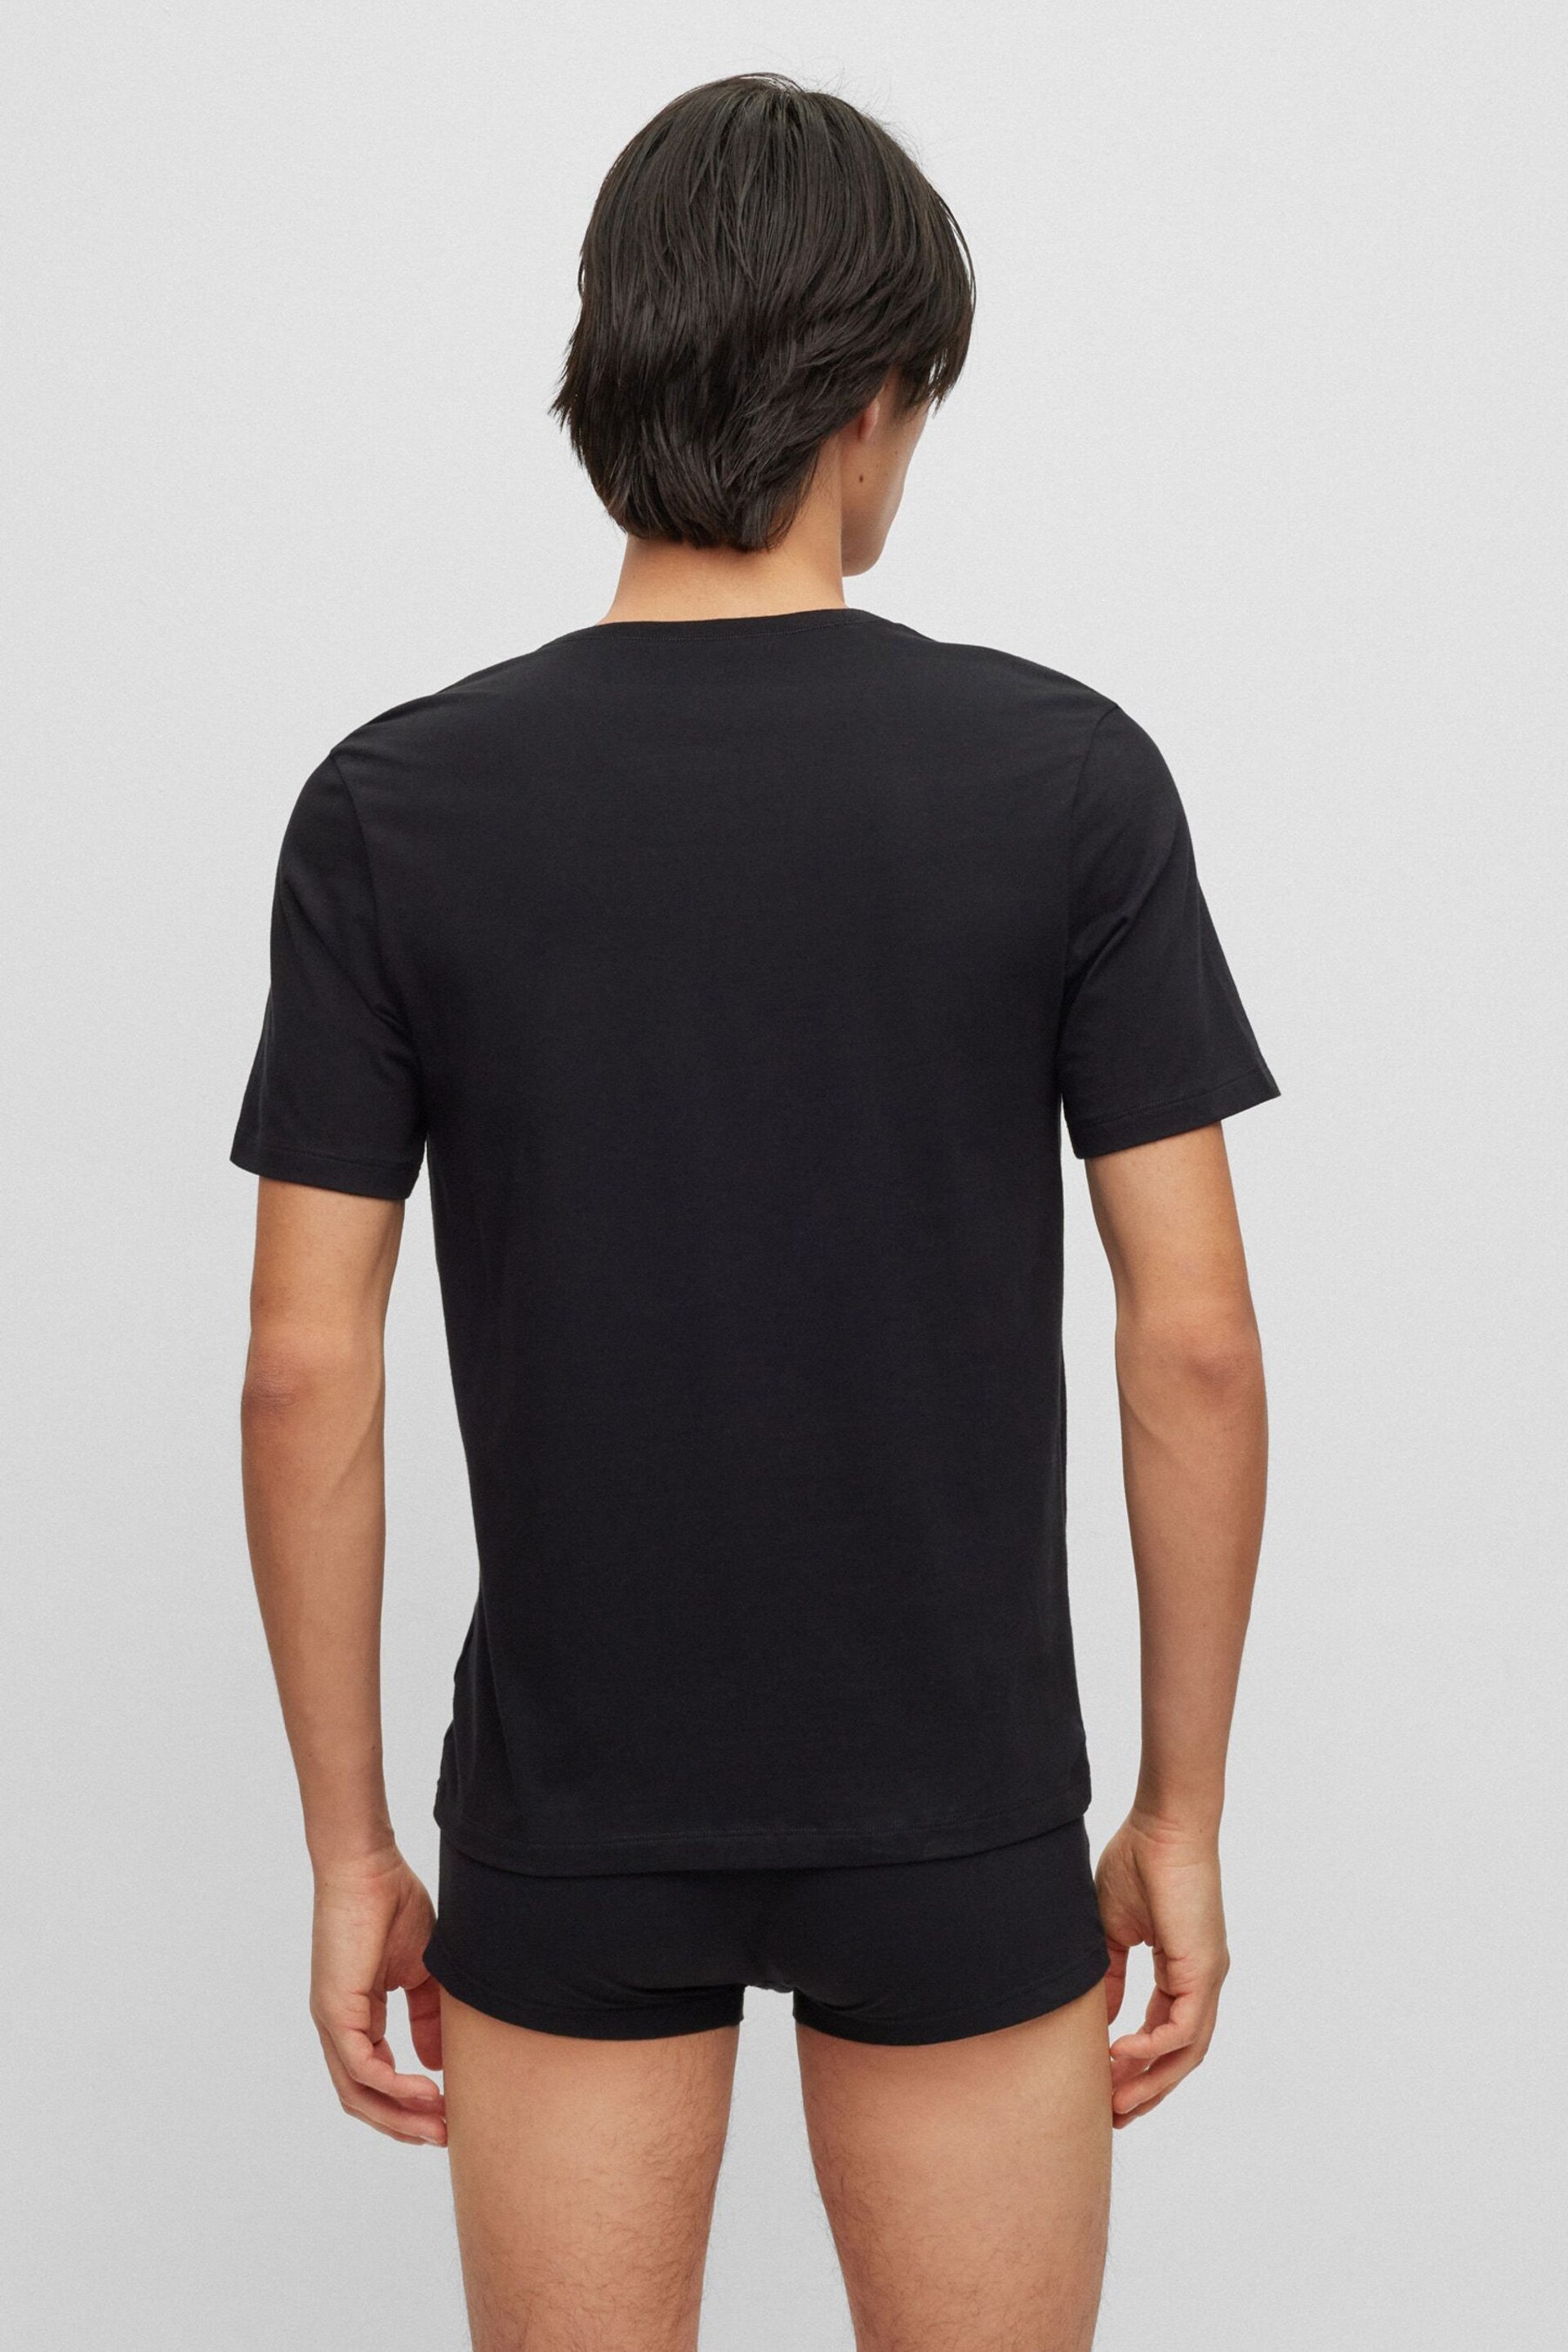 HUGO Cotton T-Shirt 3 Pack - Image 3 of 5